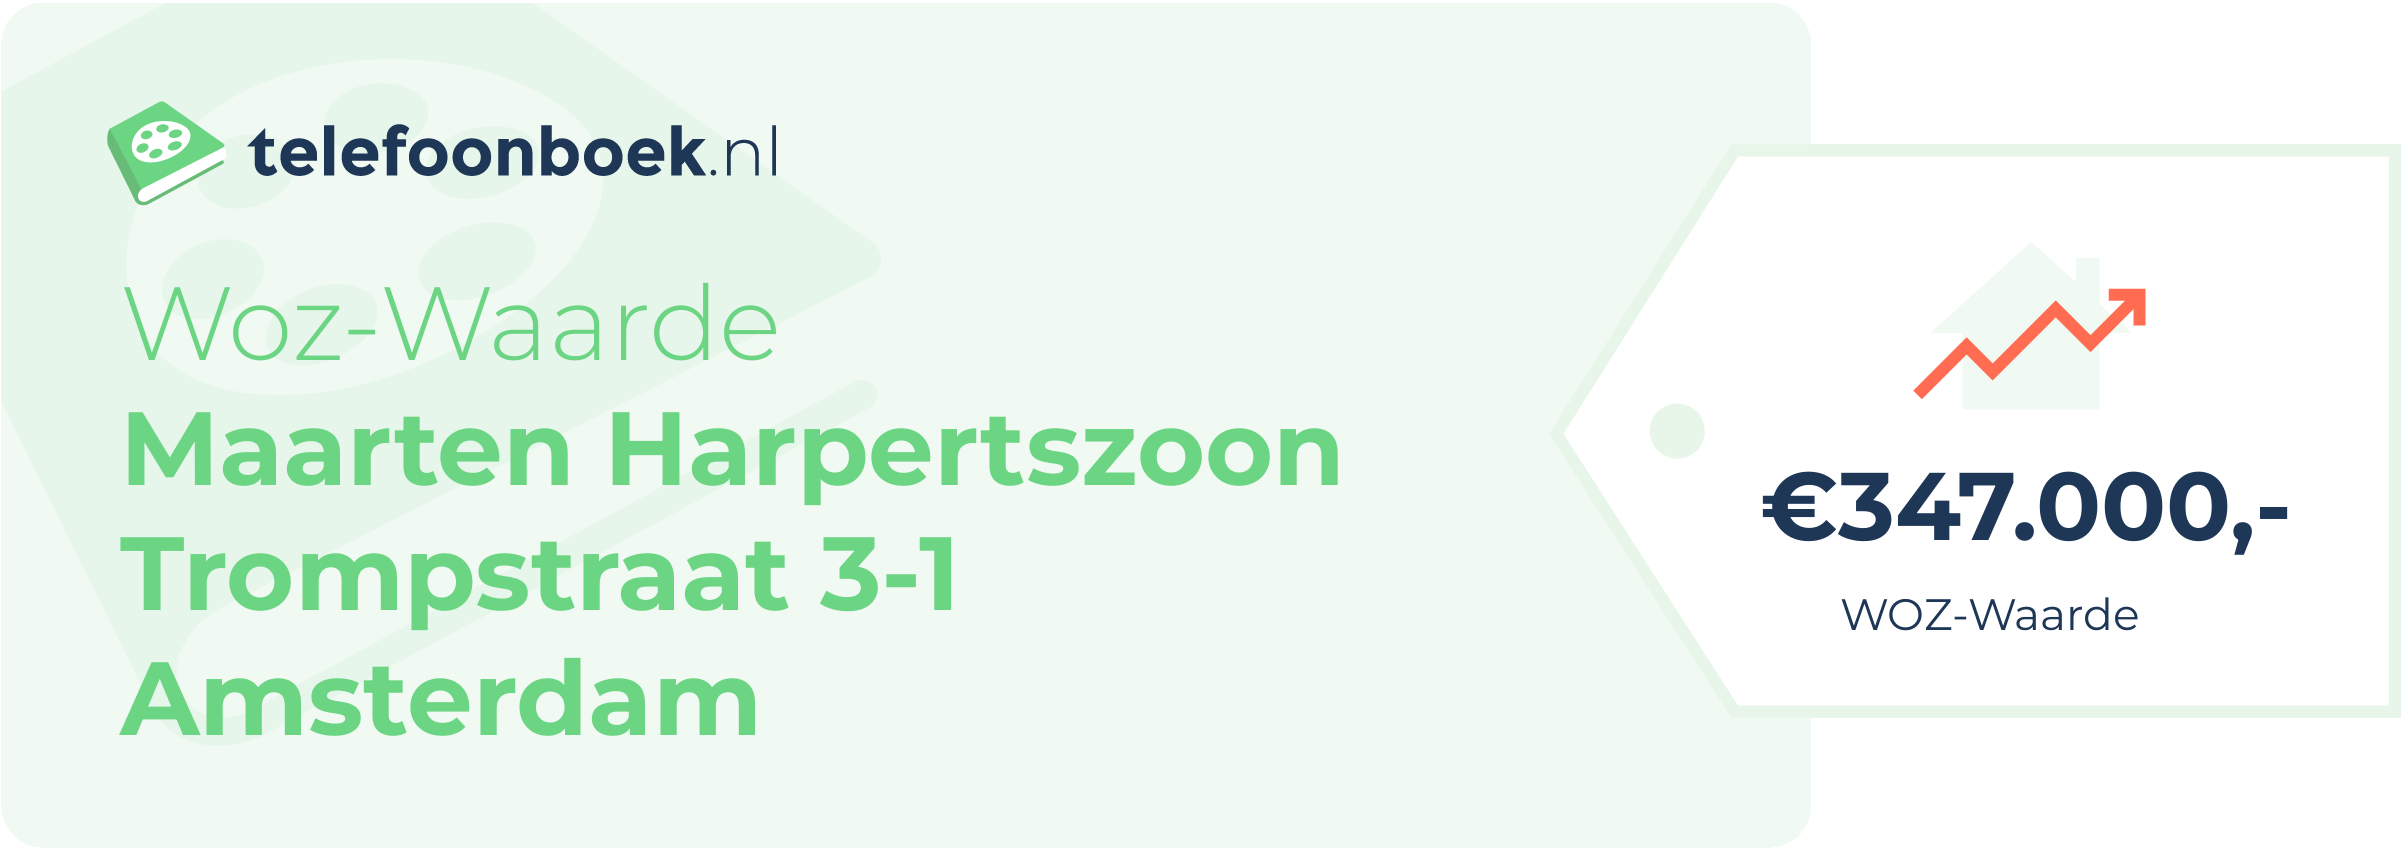 WOZ-waarde Maarten Harpertszoon Trompstraat 3-1 Amsterdam